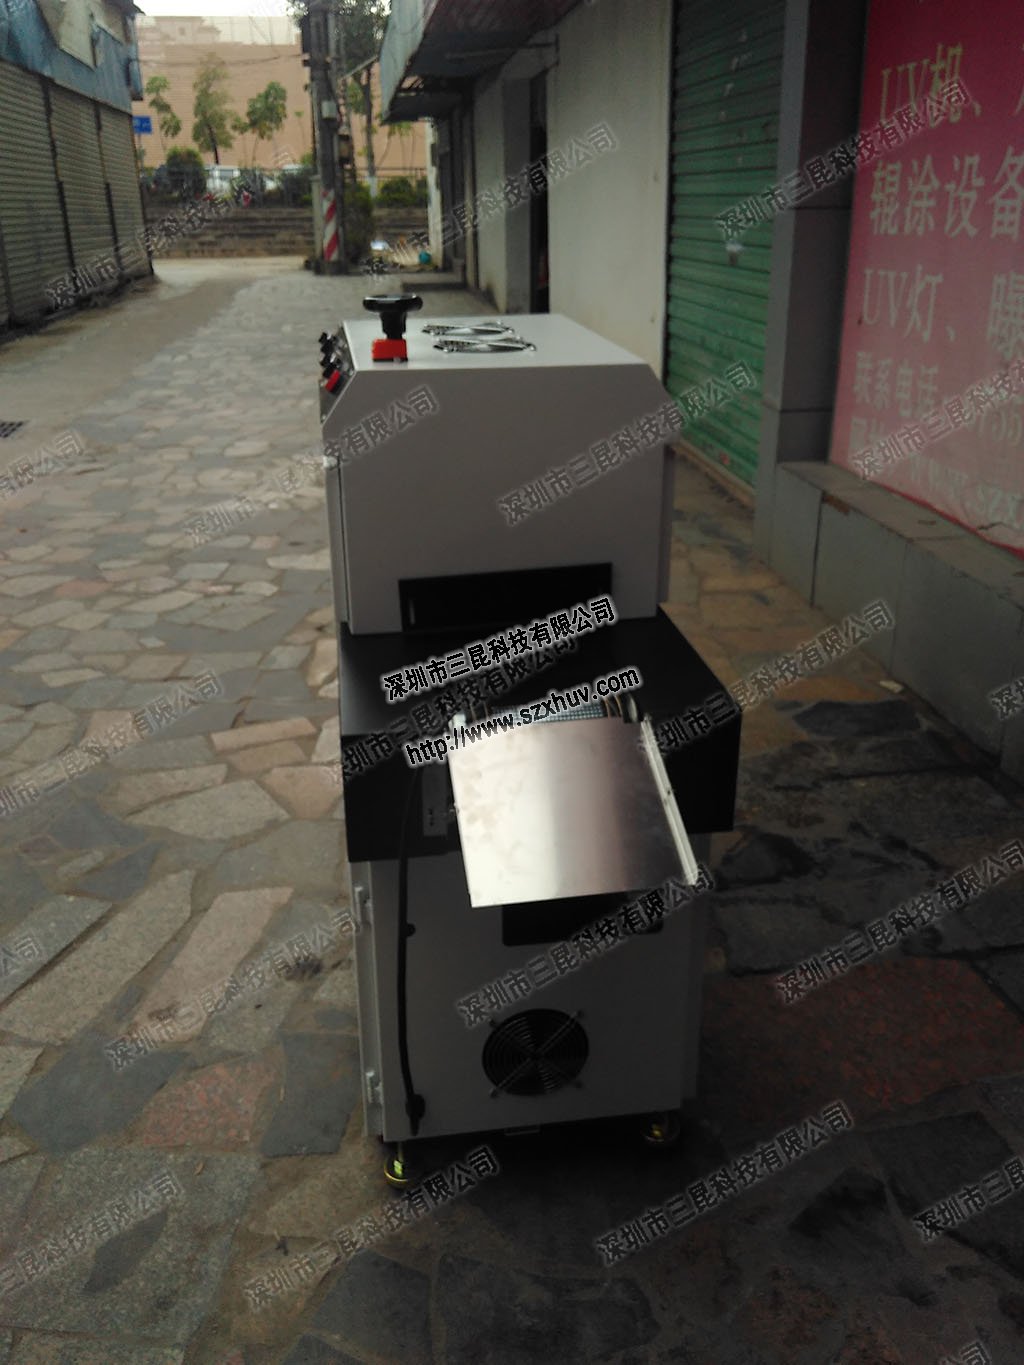 【小xinguv固hua机价格】常gui节能小xingled固hua机SK-LED-200